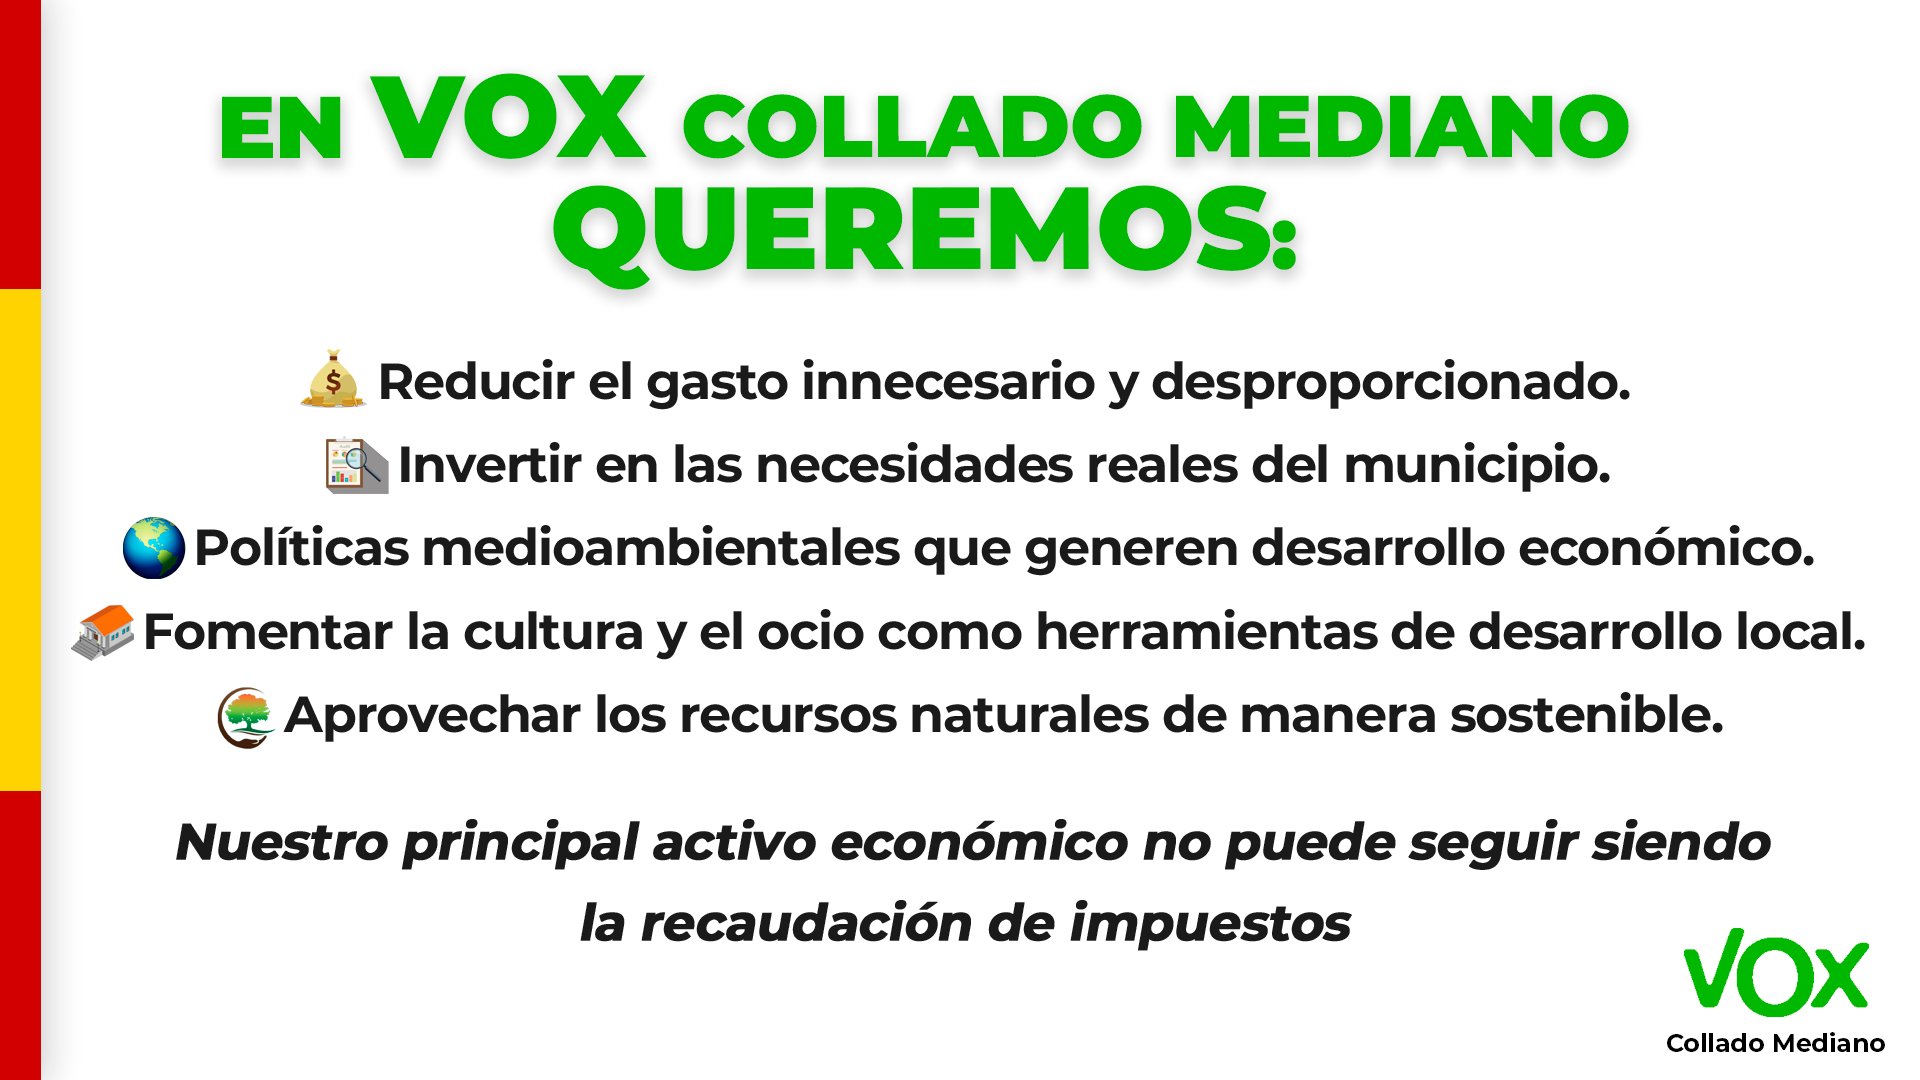 VOX Mediano / Twitter